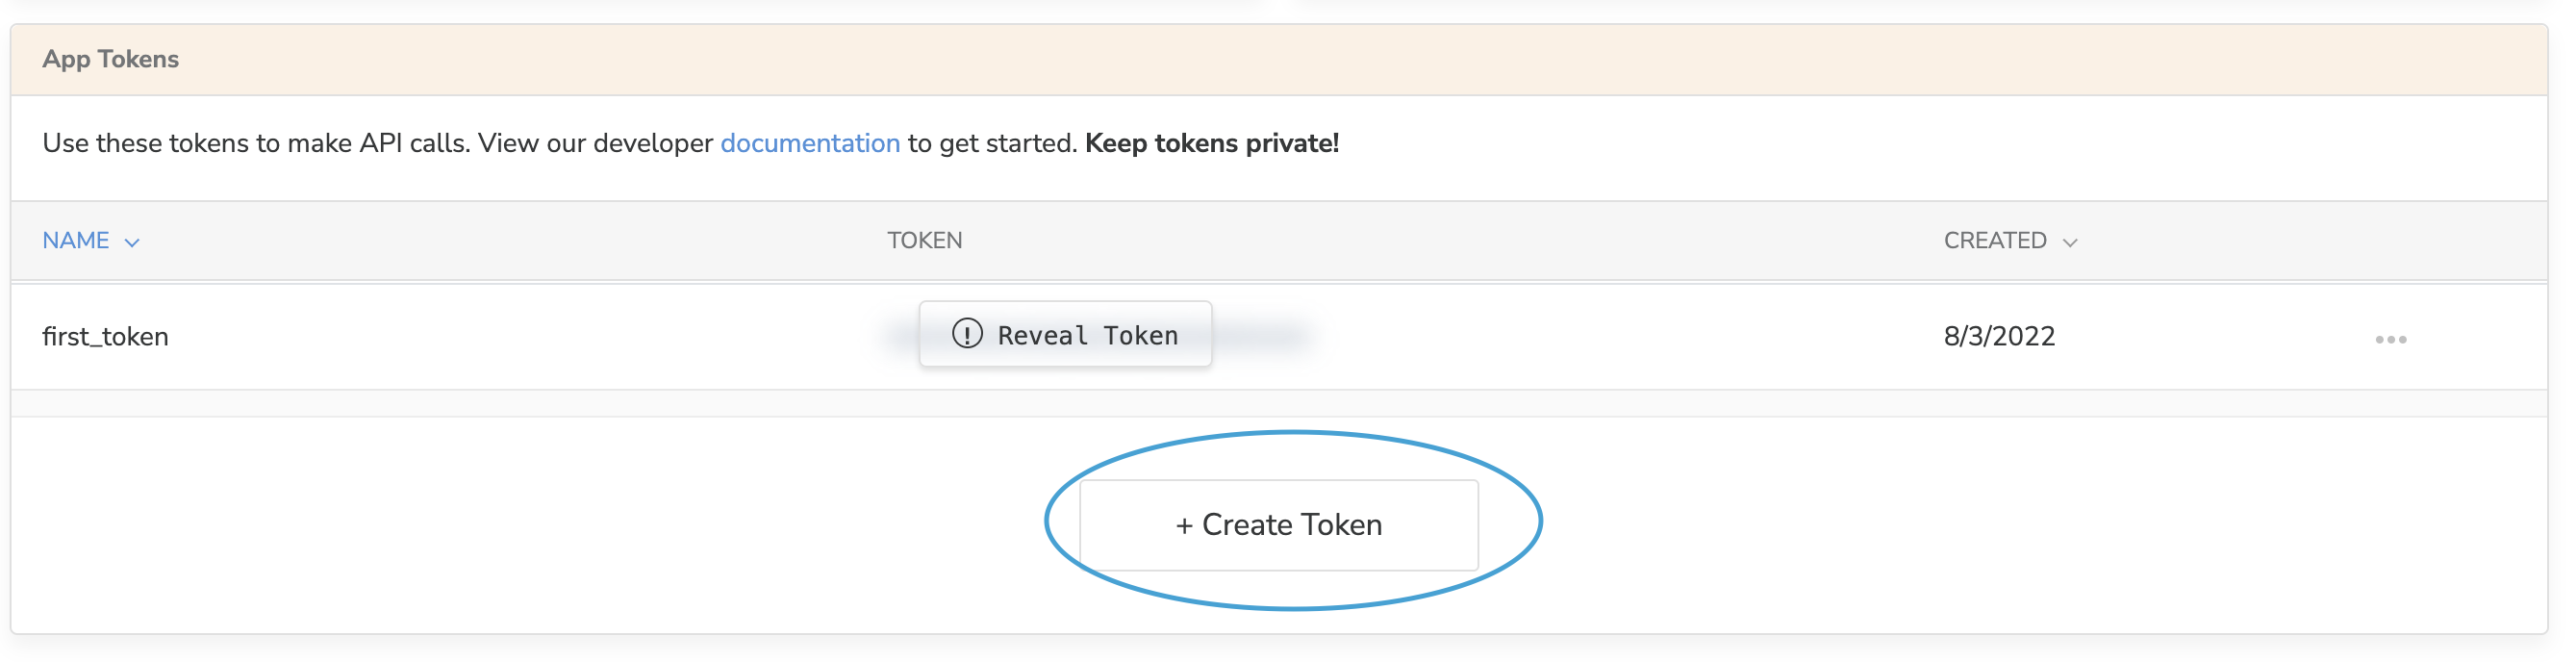 Generate an app token in Partner Center